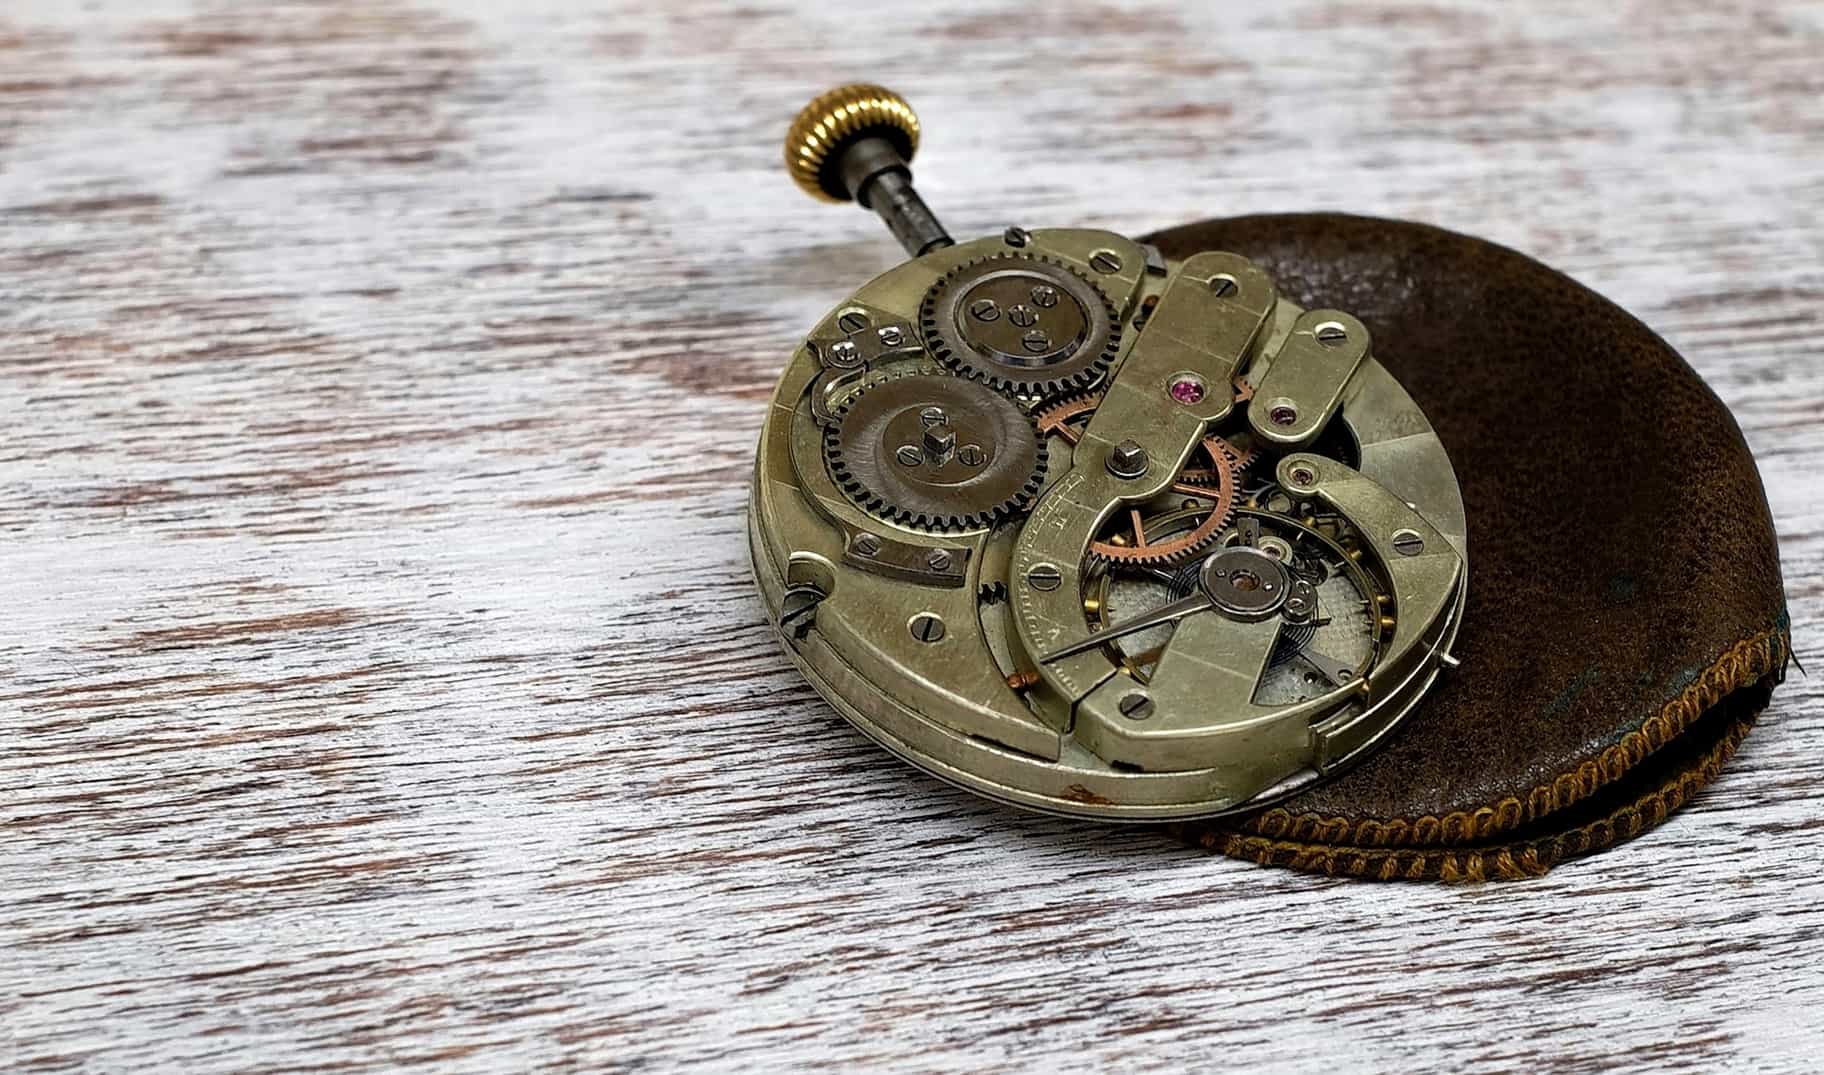 Imagen gratis: reloj, mecanismo, reloj, mesa, madera, metal, tecnología